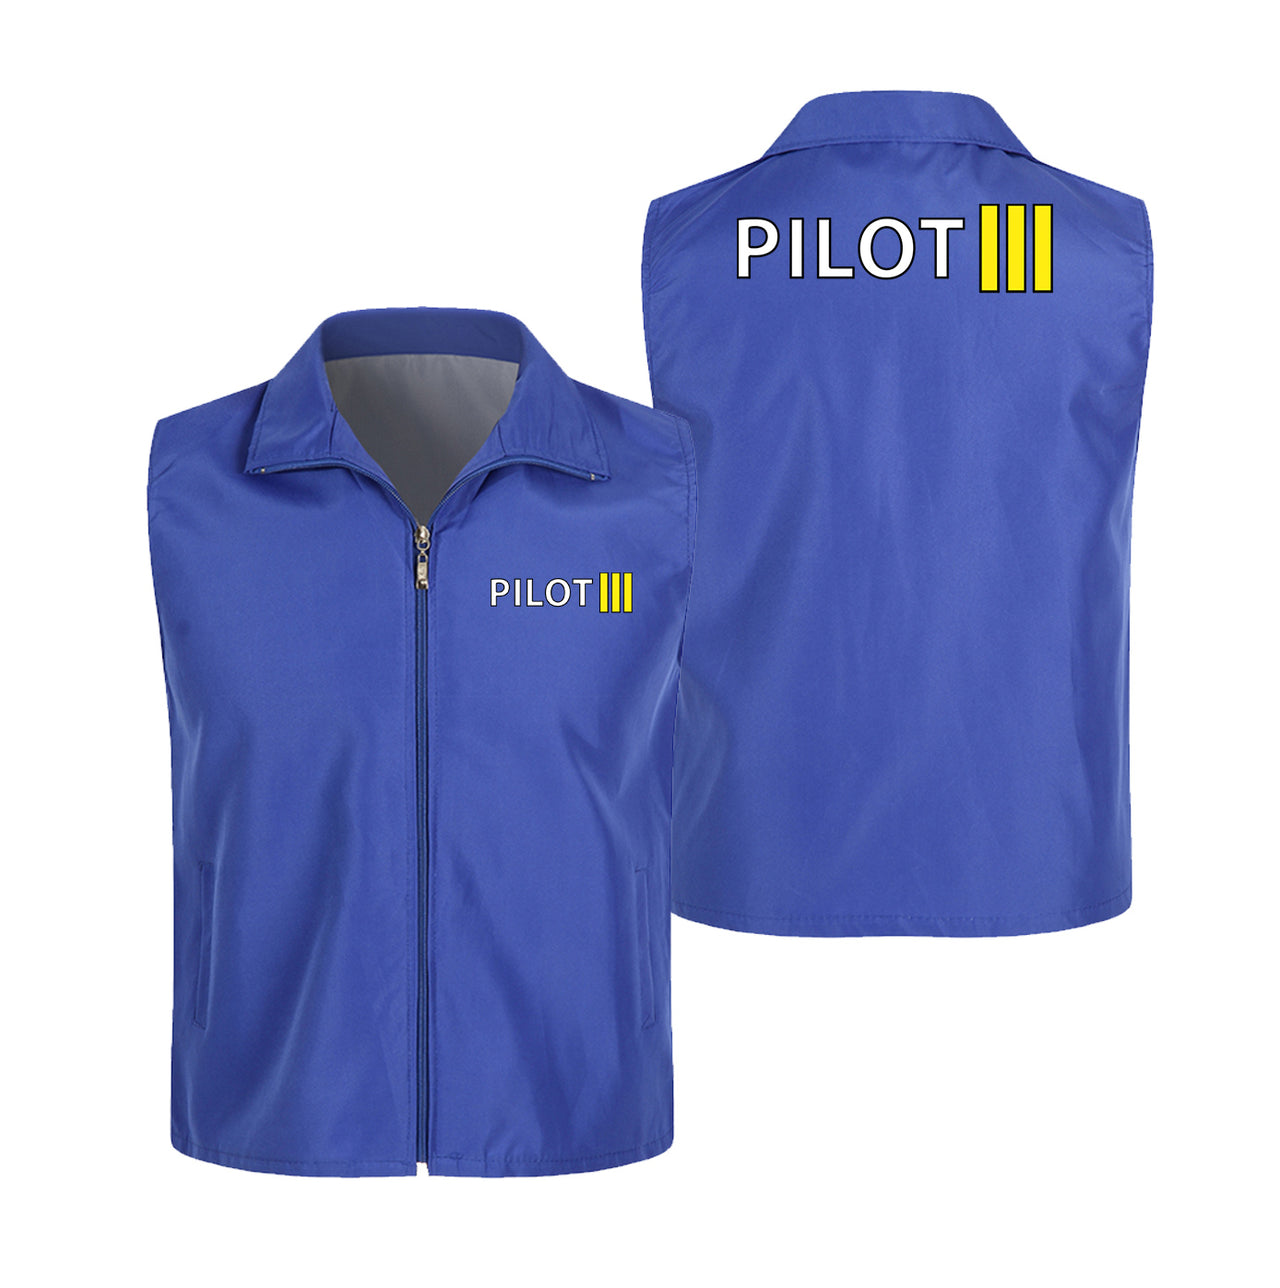 Pilot & Stripes (3 Lines) Designed Thin Style Vests